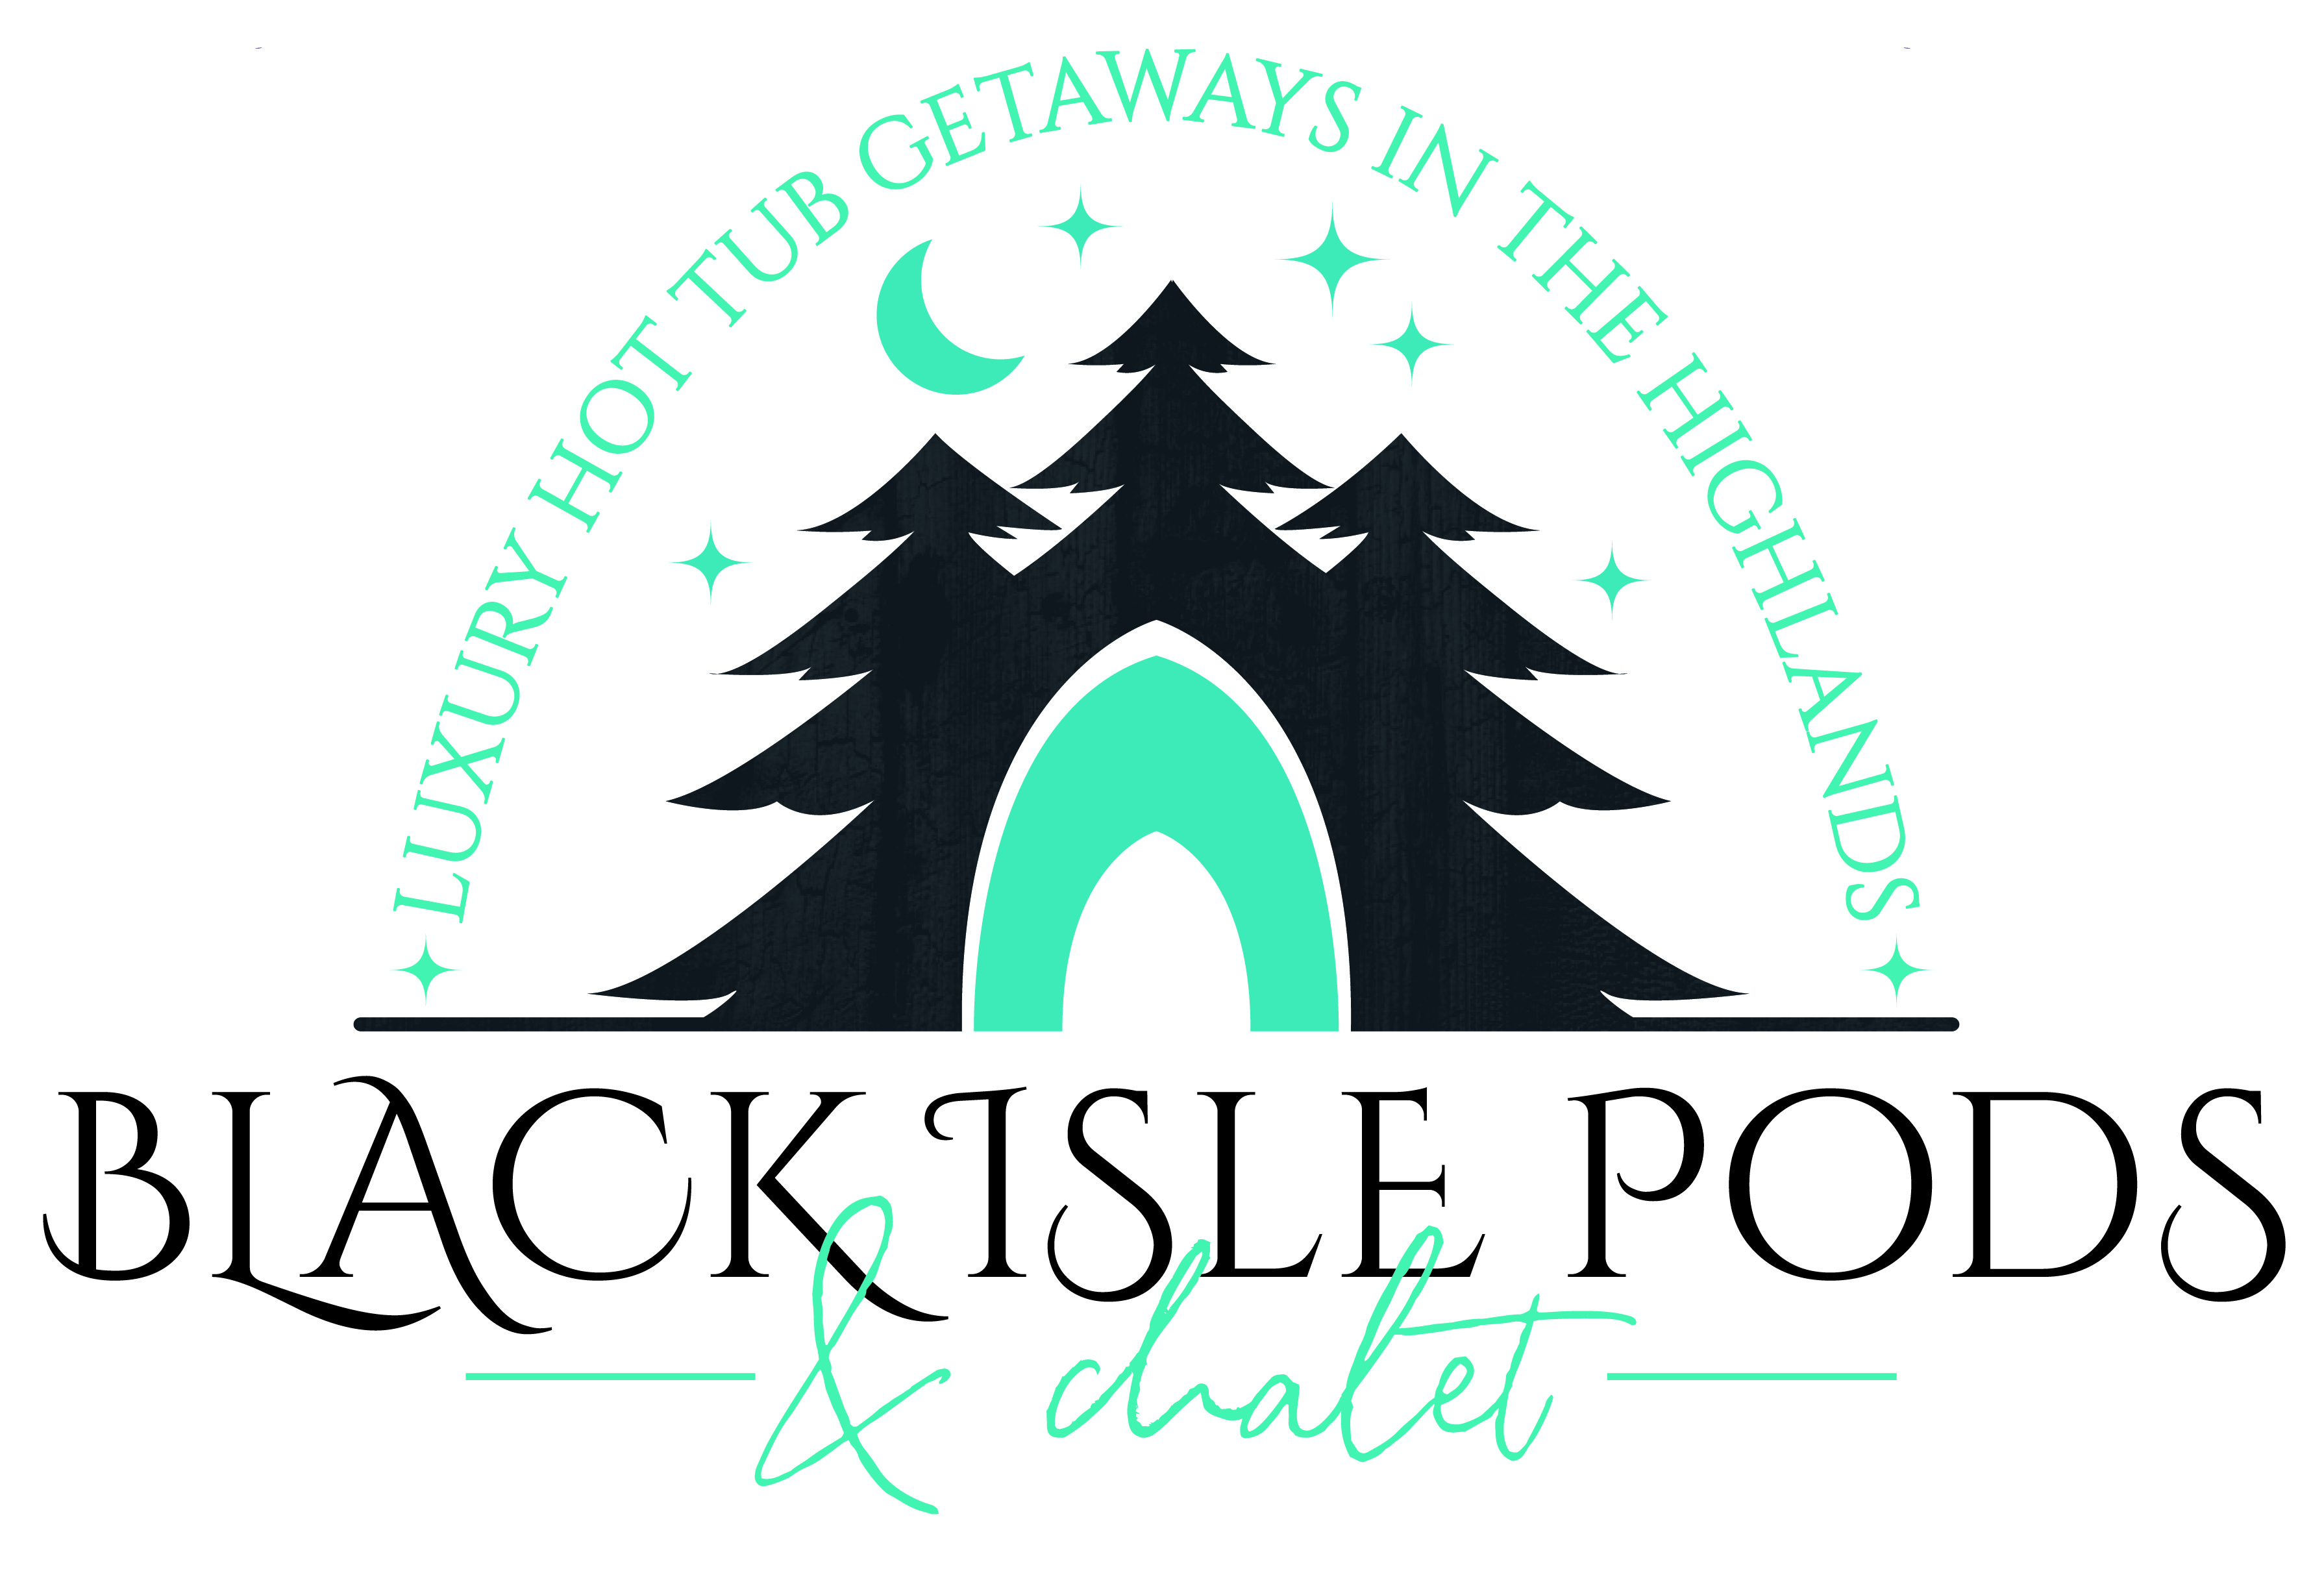 Black Isle Pods & Chalet